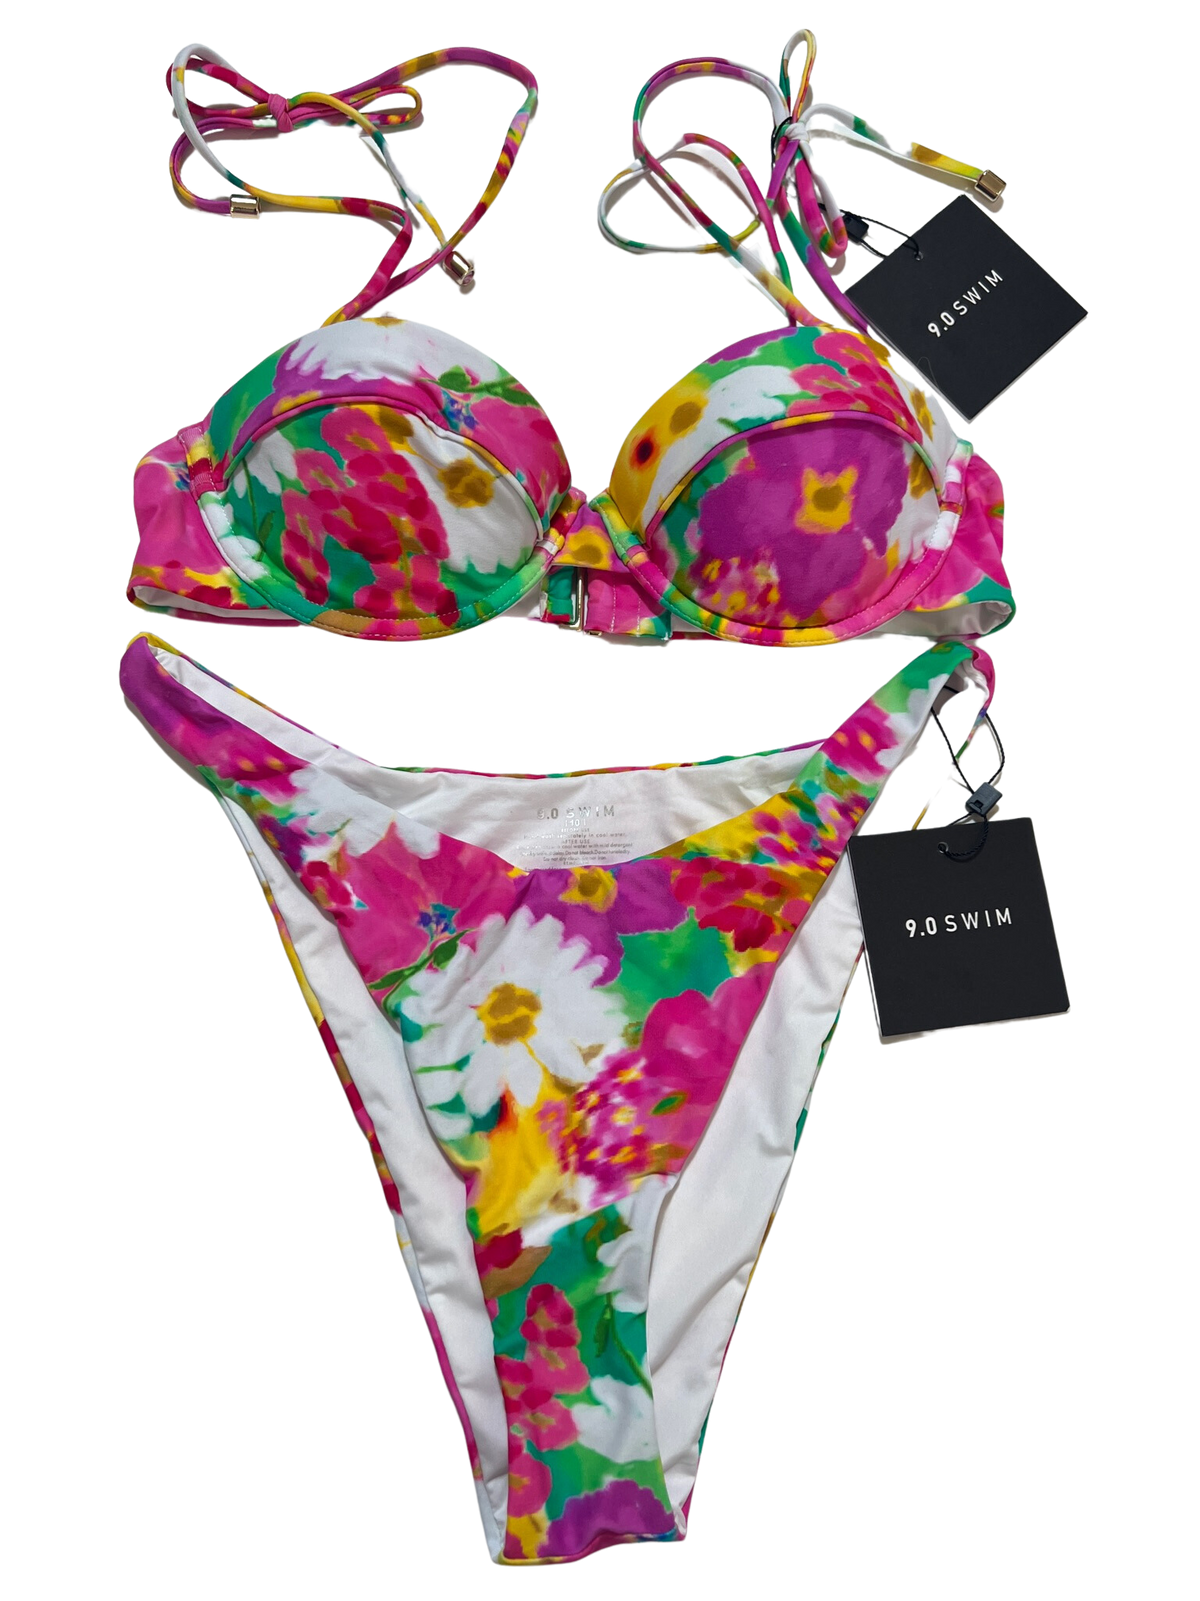 9.0 Swim- Printed "Bianca" Bikini NEW WITH TAGS